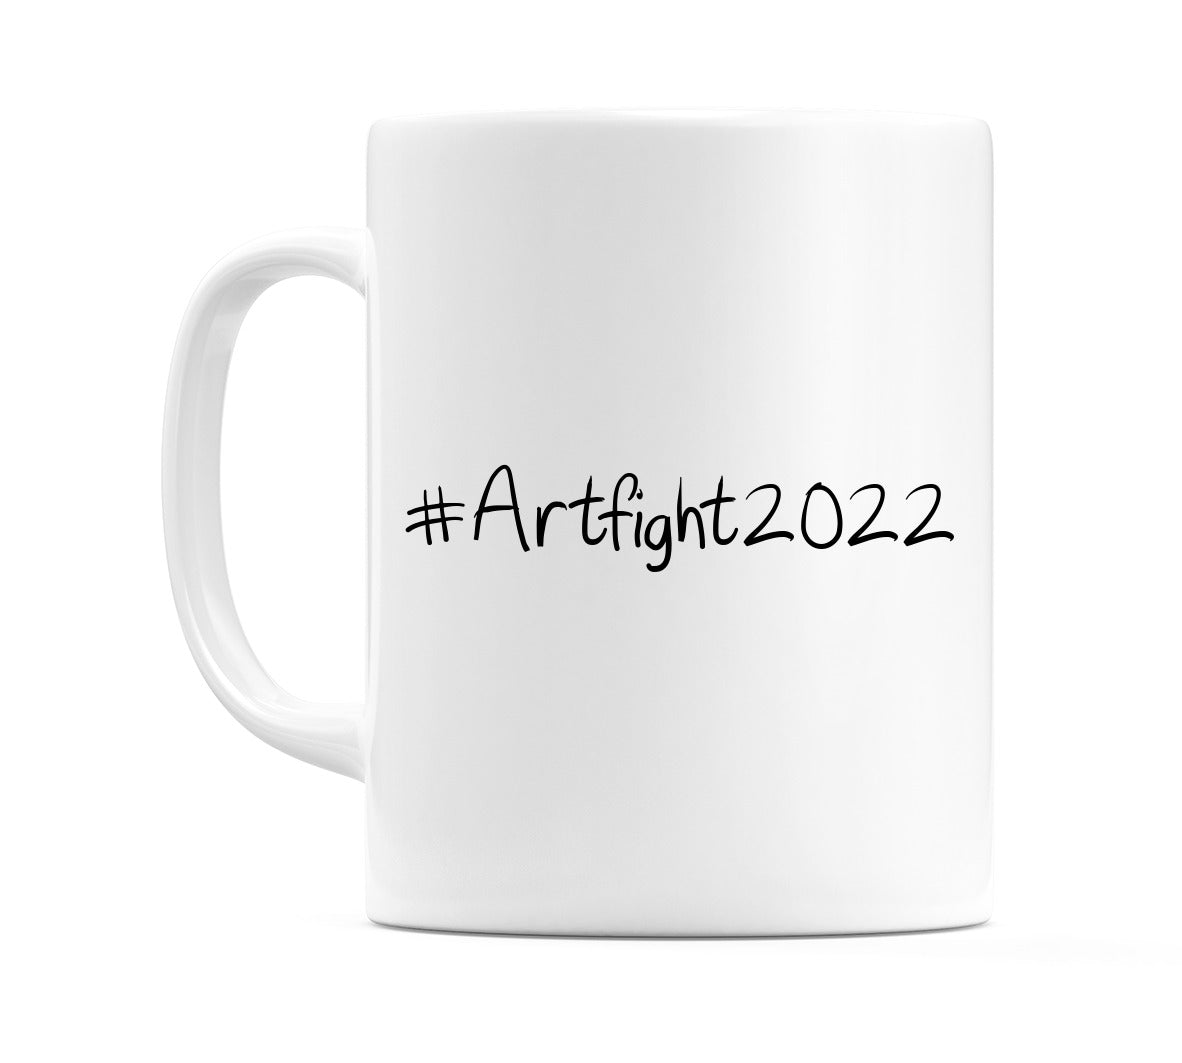 #Artfight2022 Mug